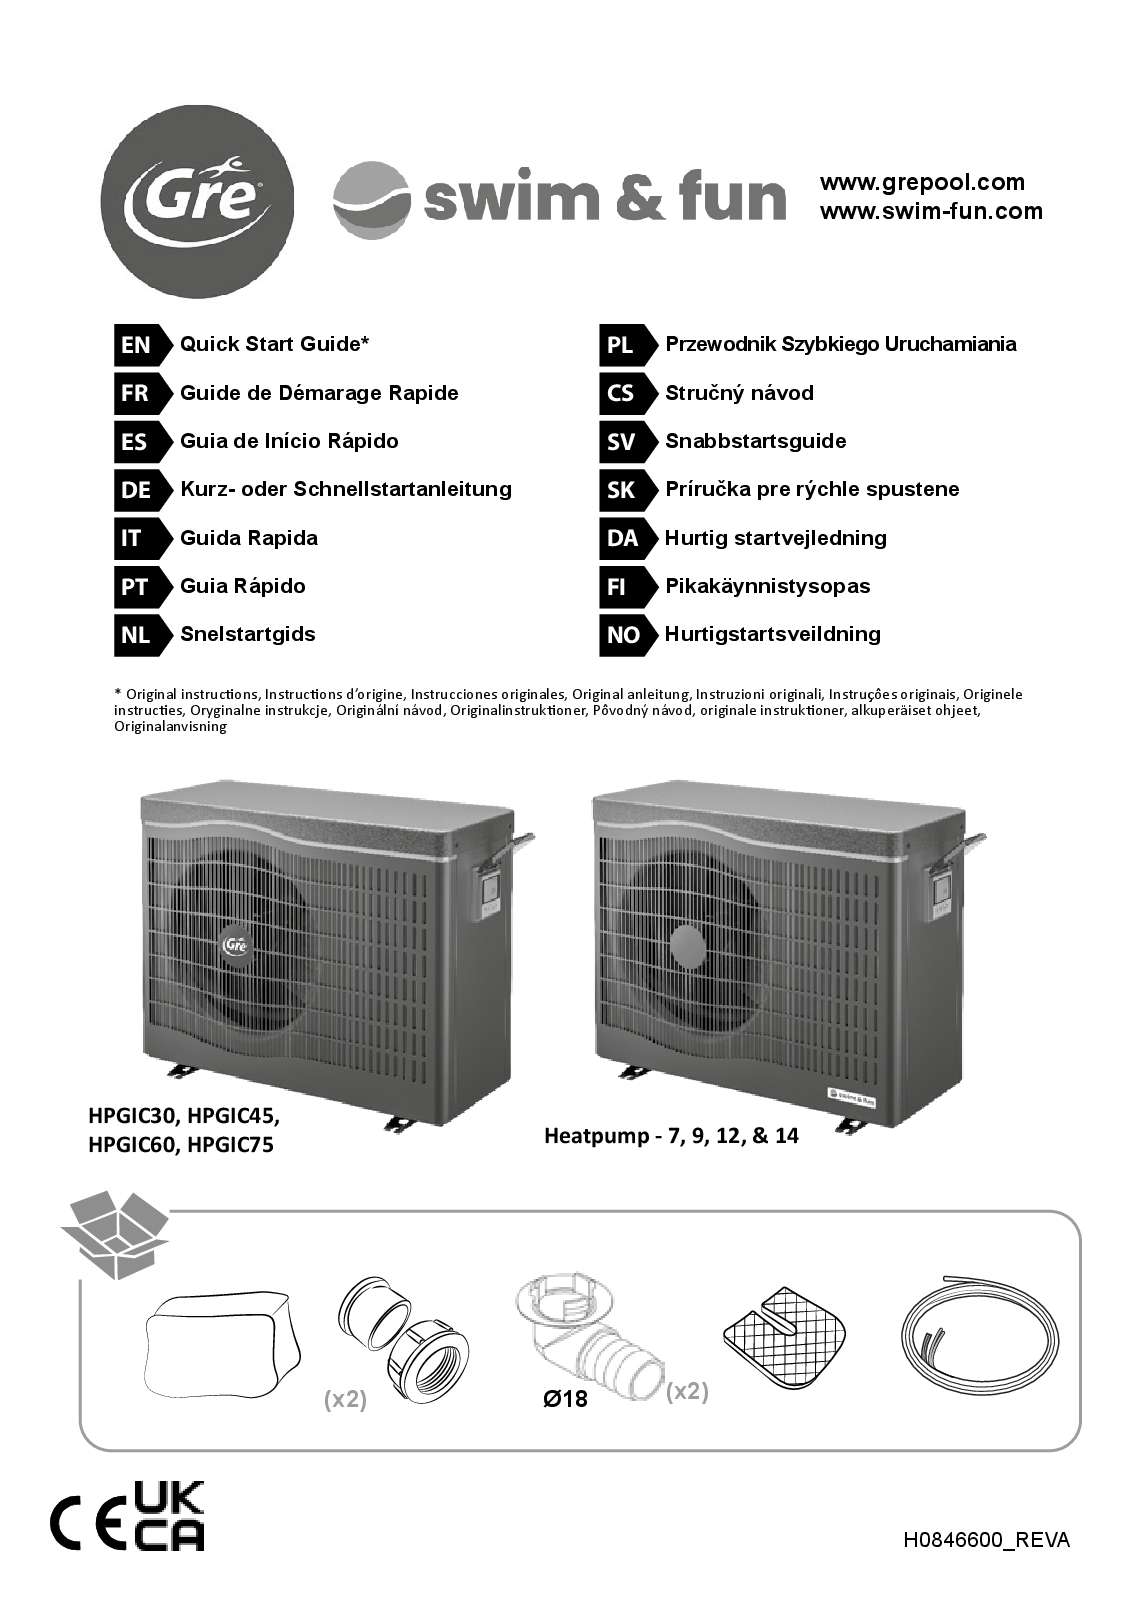 Full Inverter Heat Pump - 1440/1441/1442